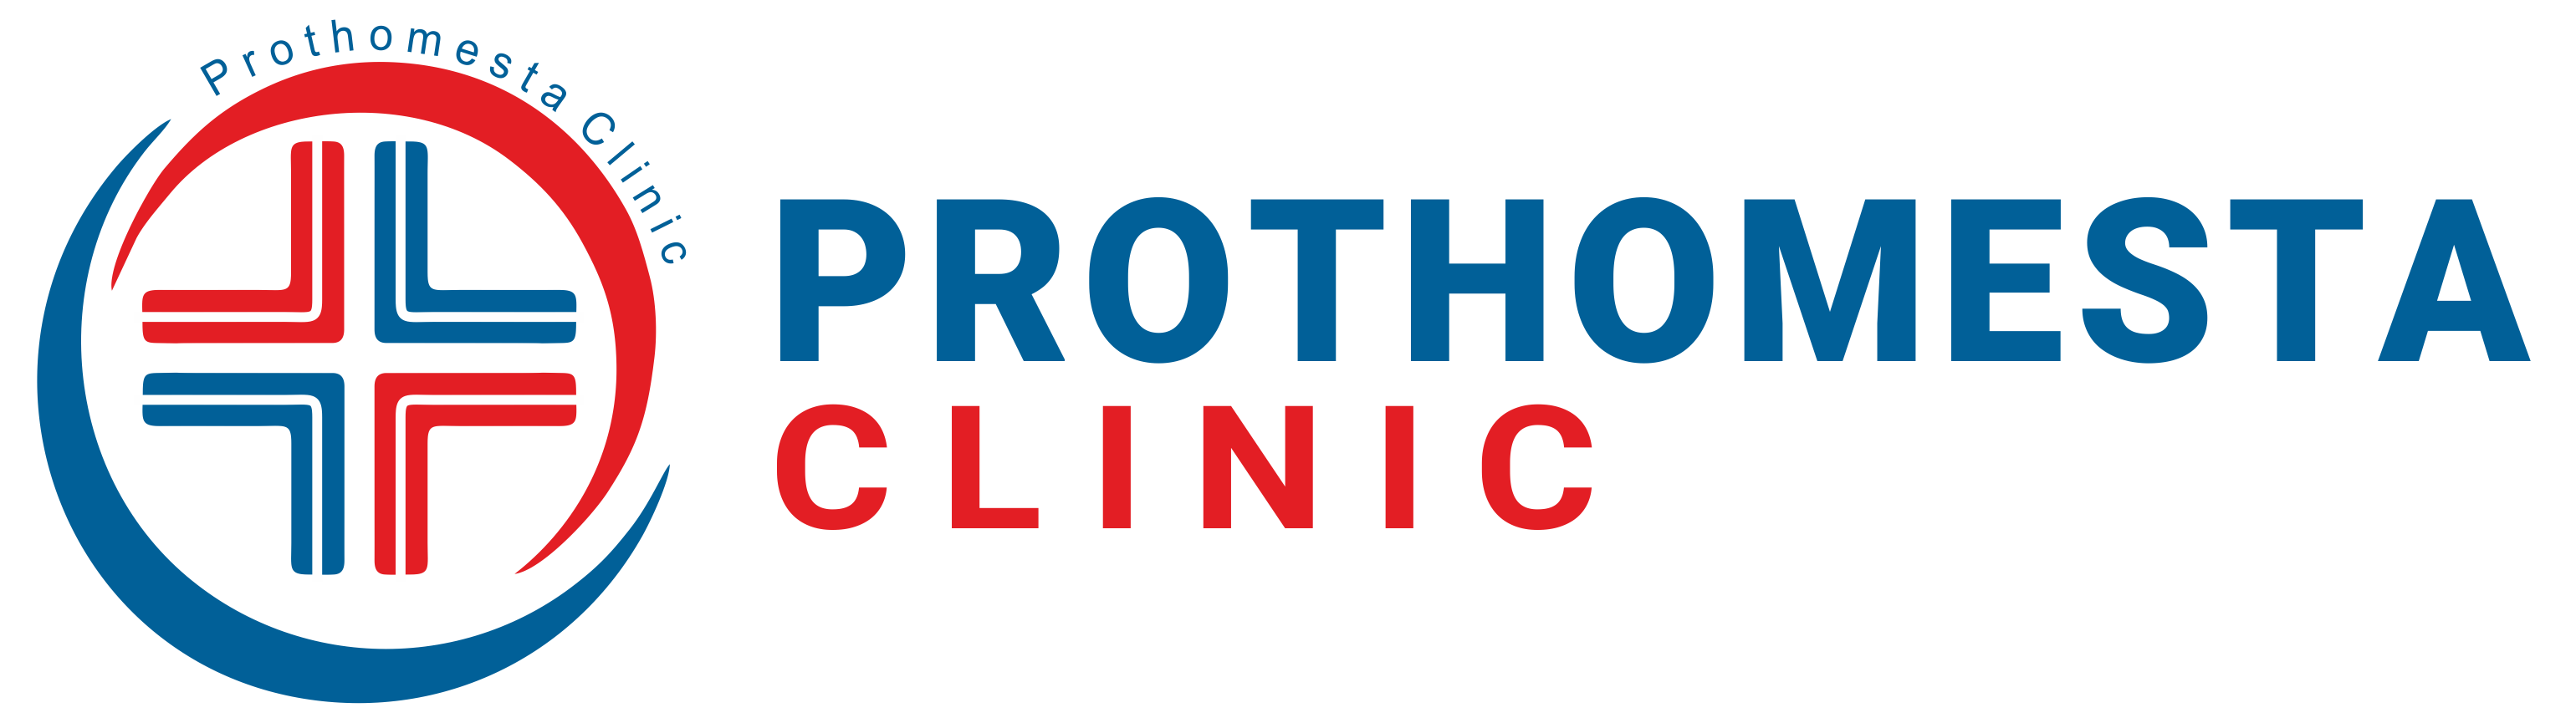 Prothomesta Clinic